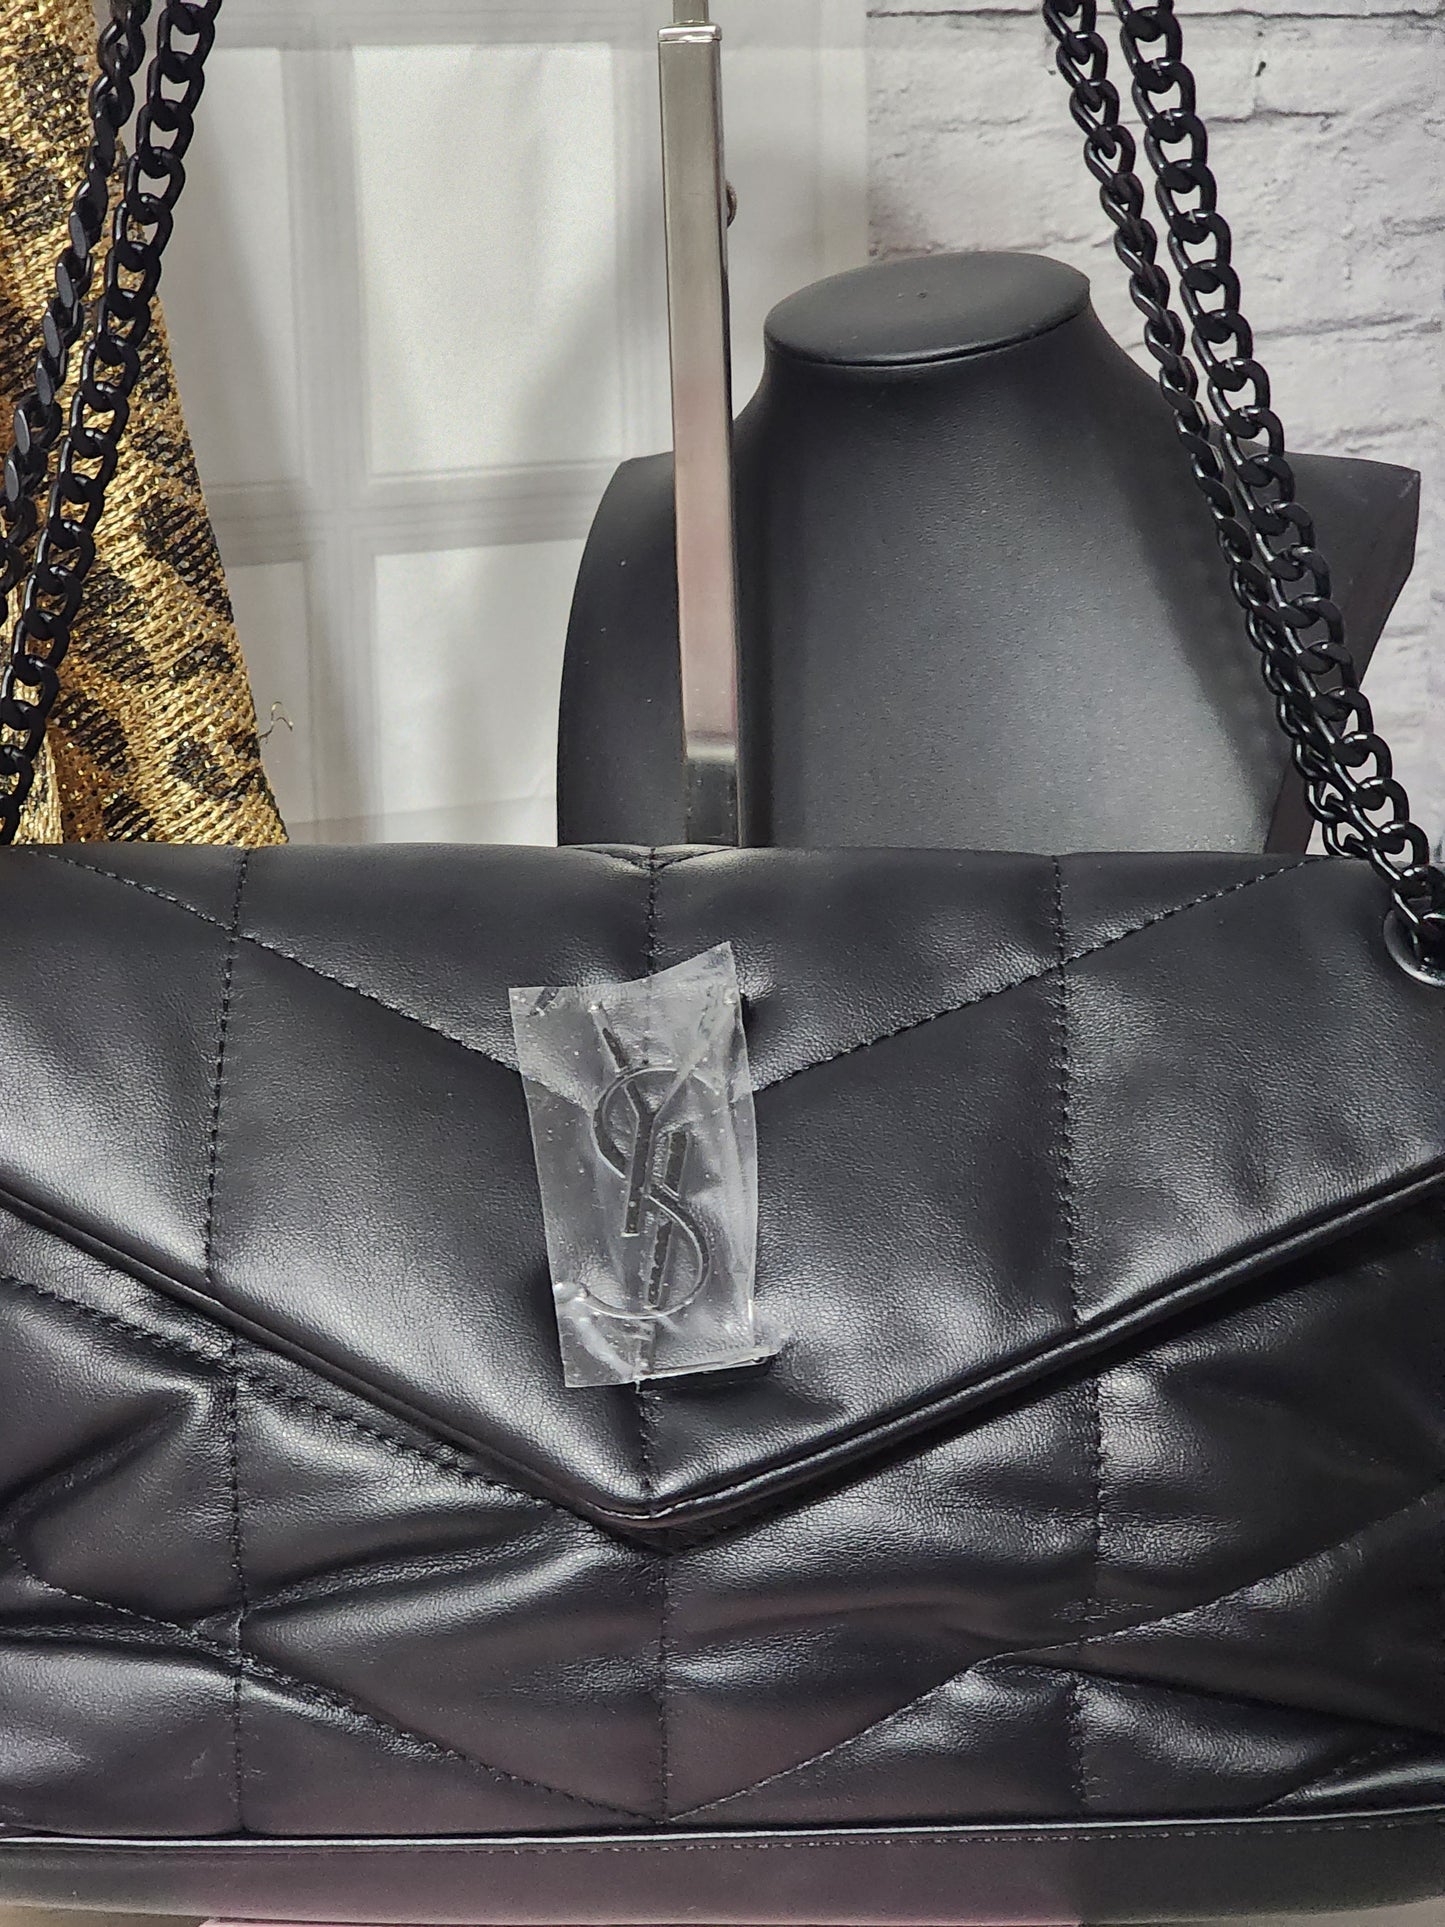 Inspired Soft Black Handbags